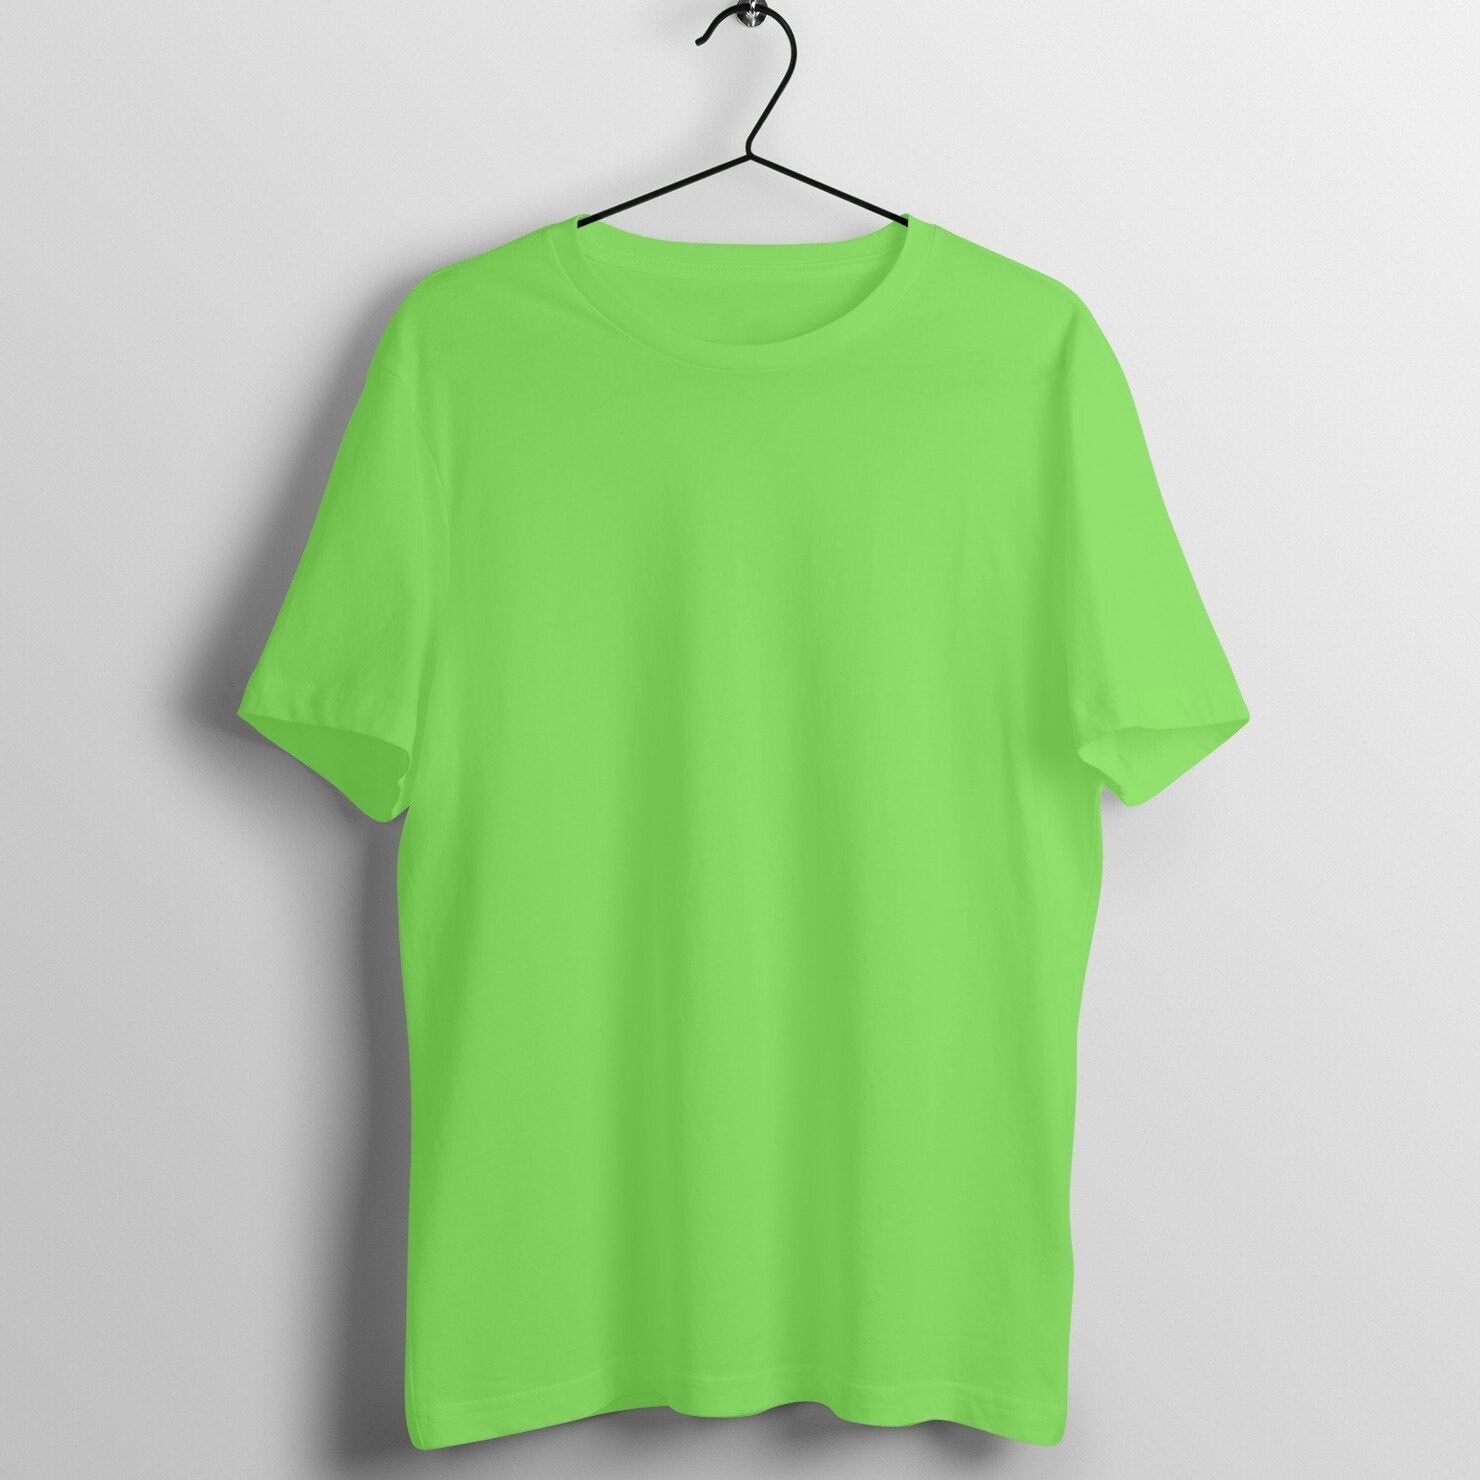 Liril Green Half Sleeve T-Shirt - Insane Tees